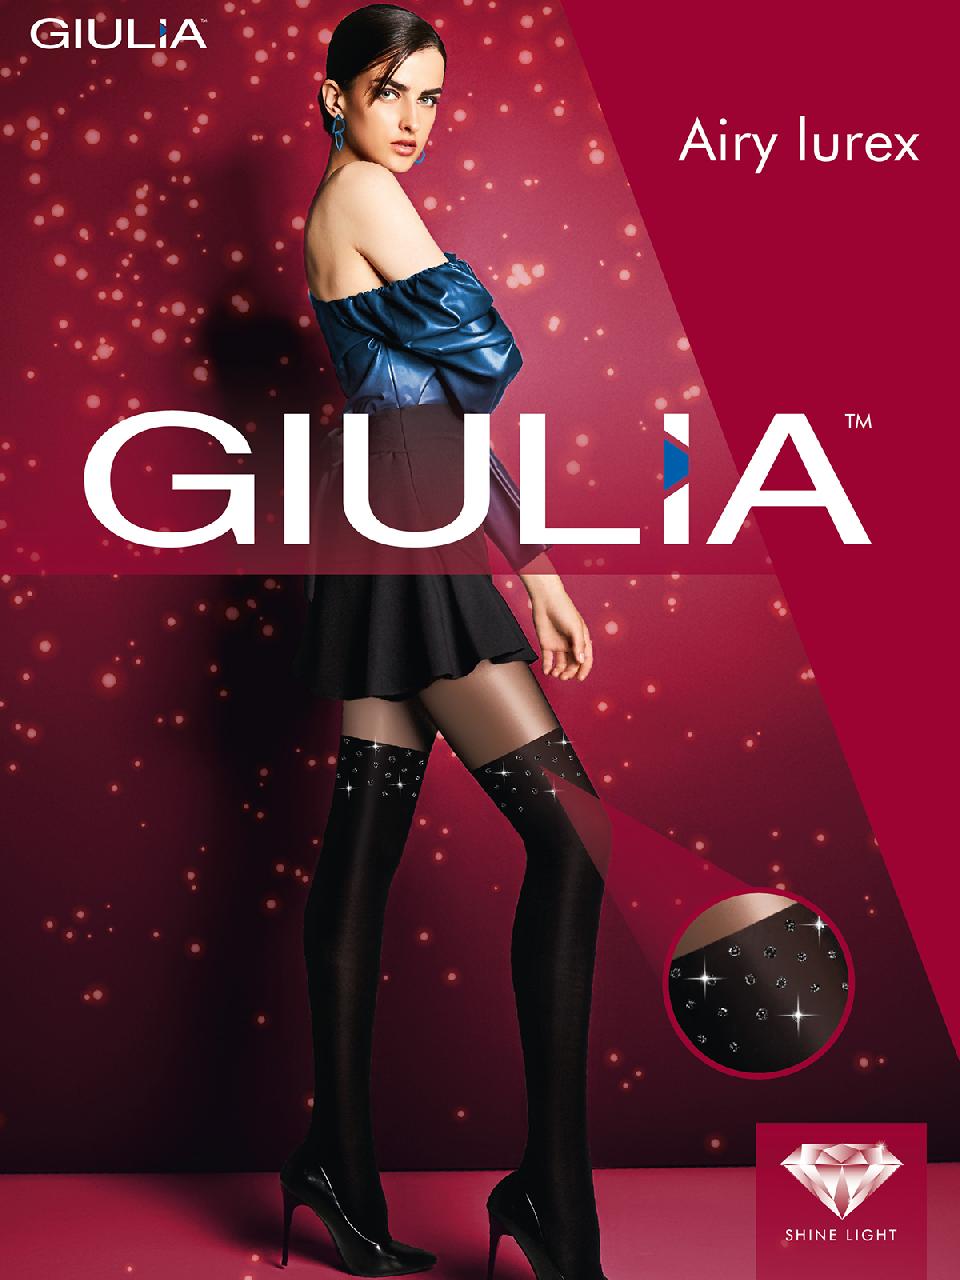 Giulia Airy Lurex 01 /колготки/ deep-navy 3